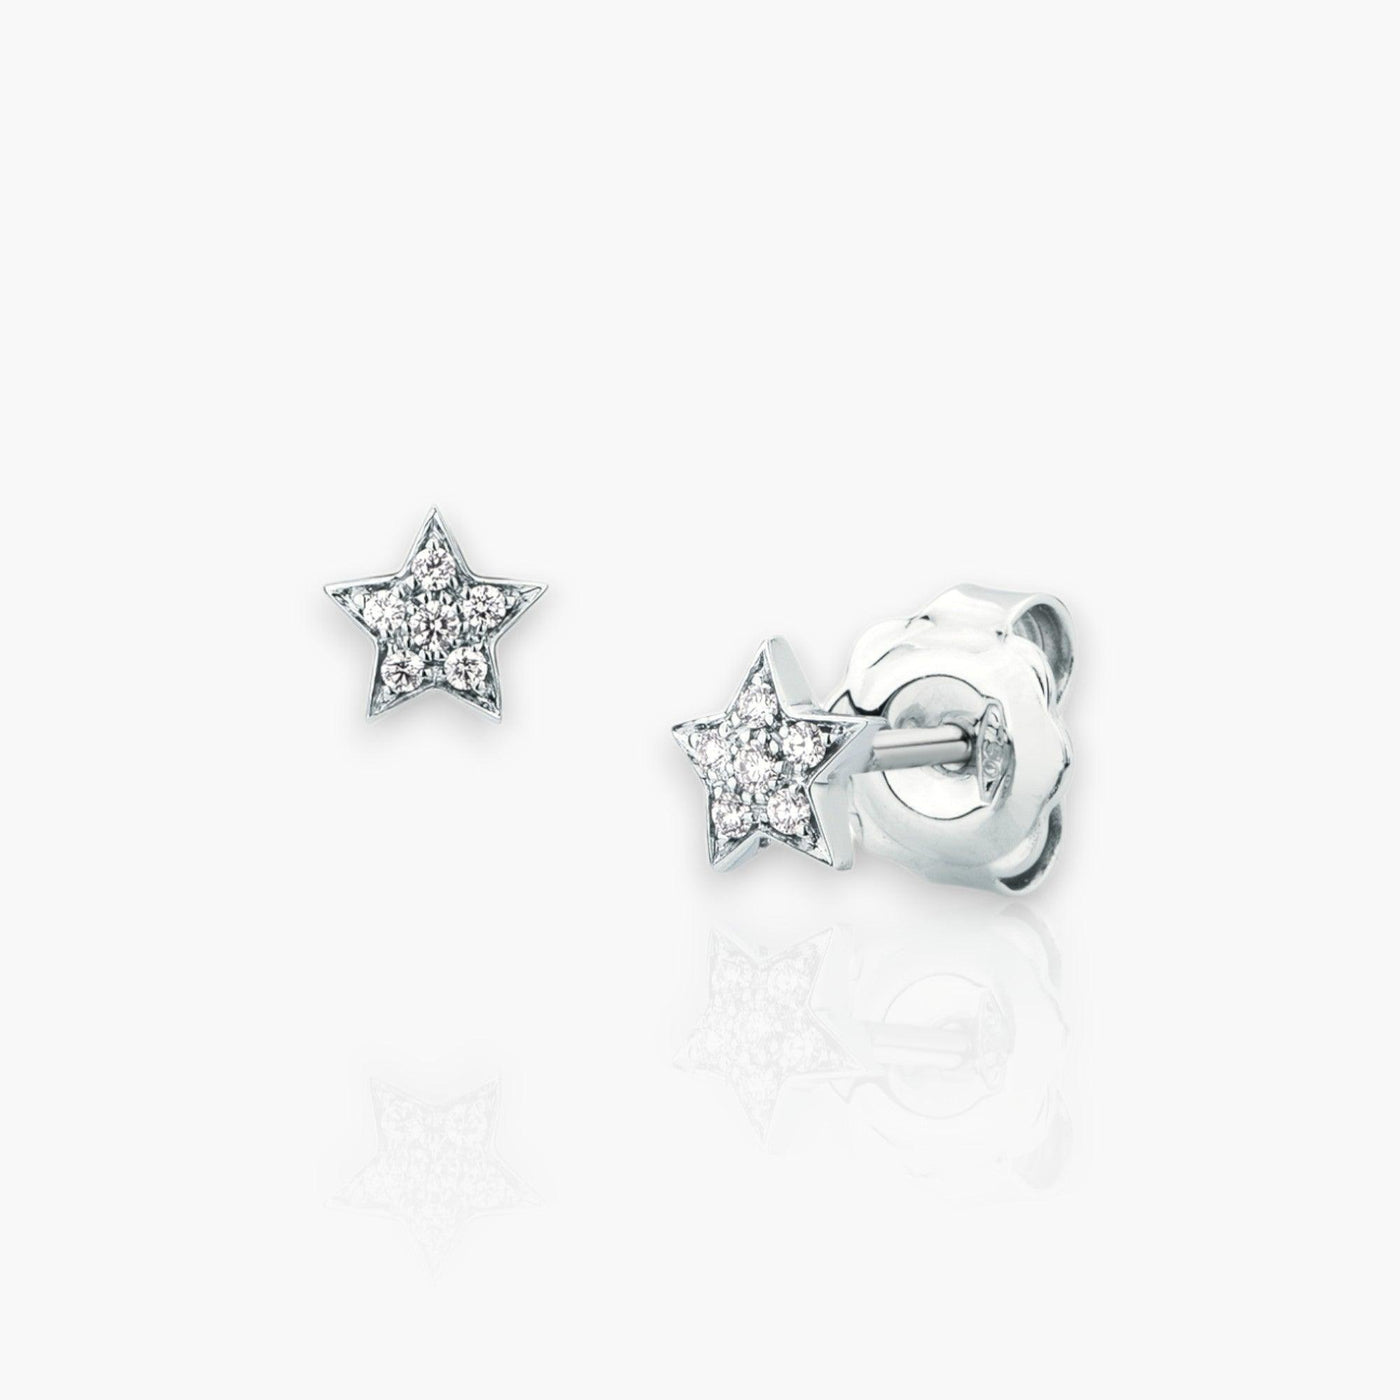 18K White Gold Star studs in 2 sizes - Moregola Fine Jewelry